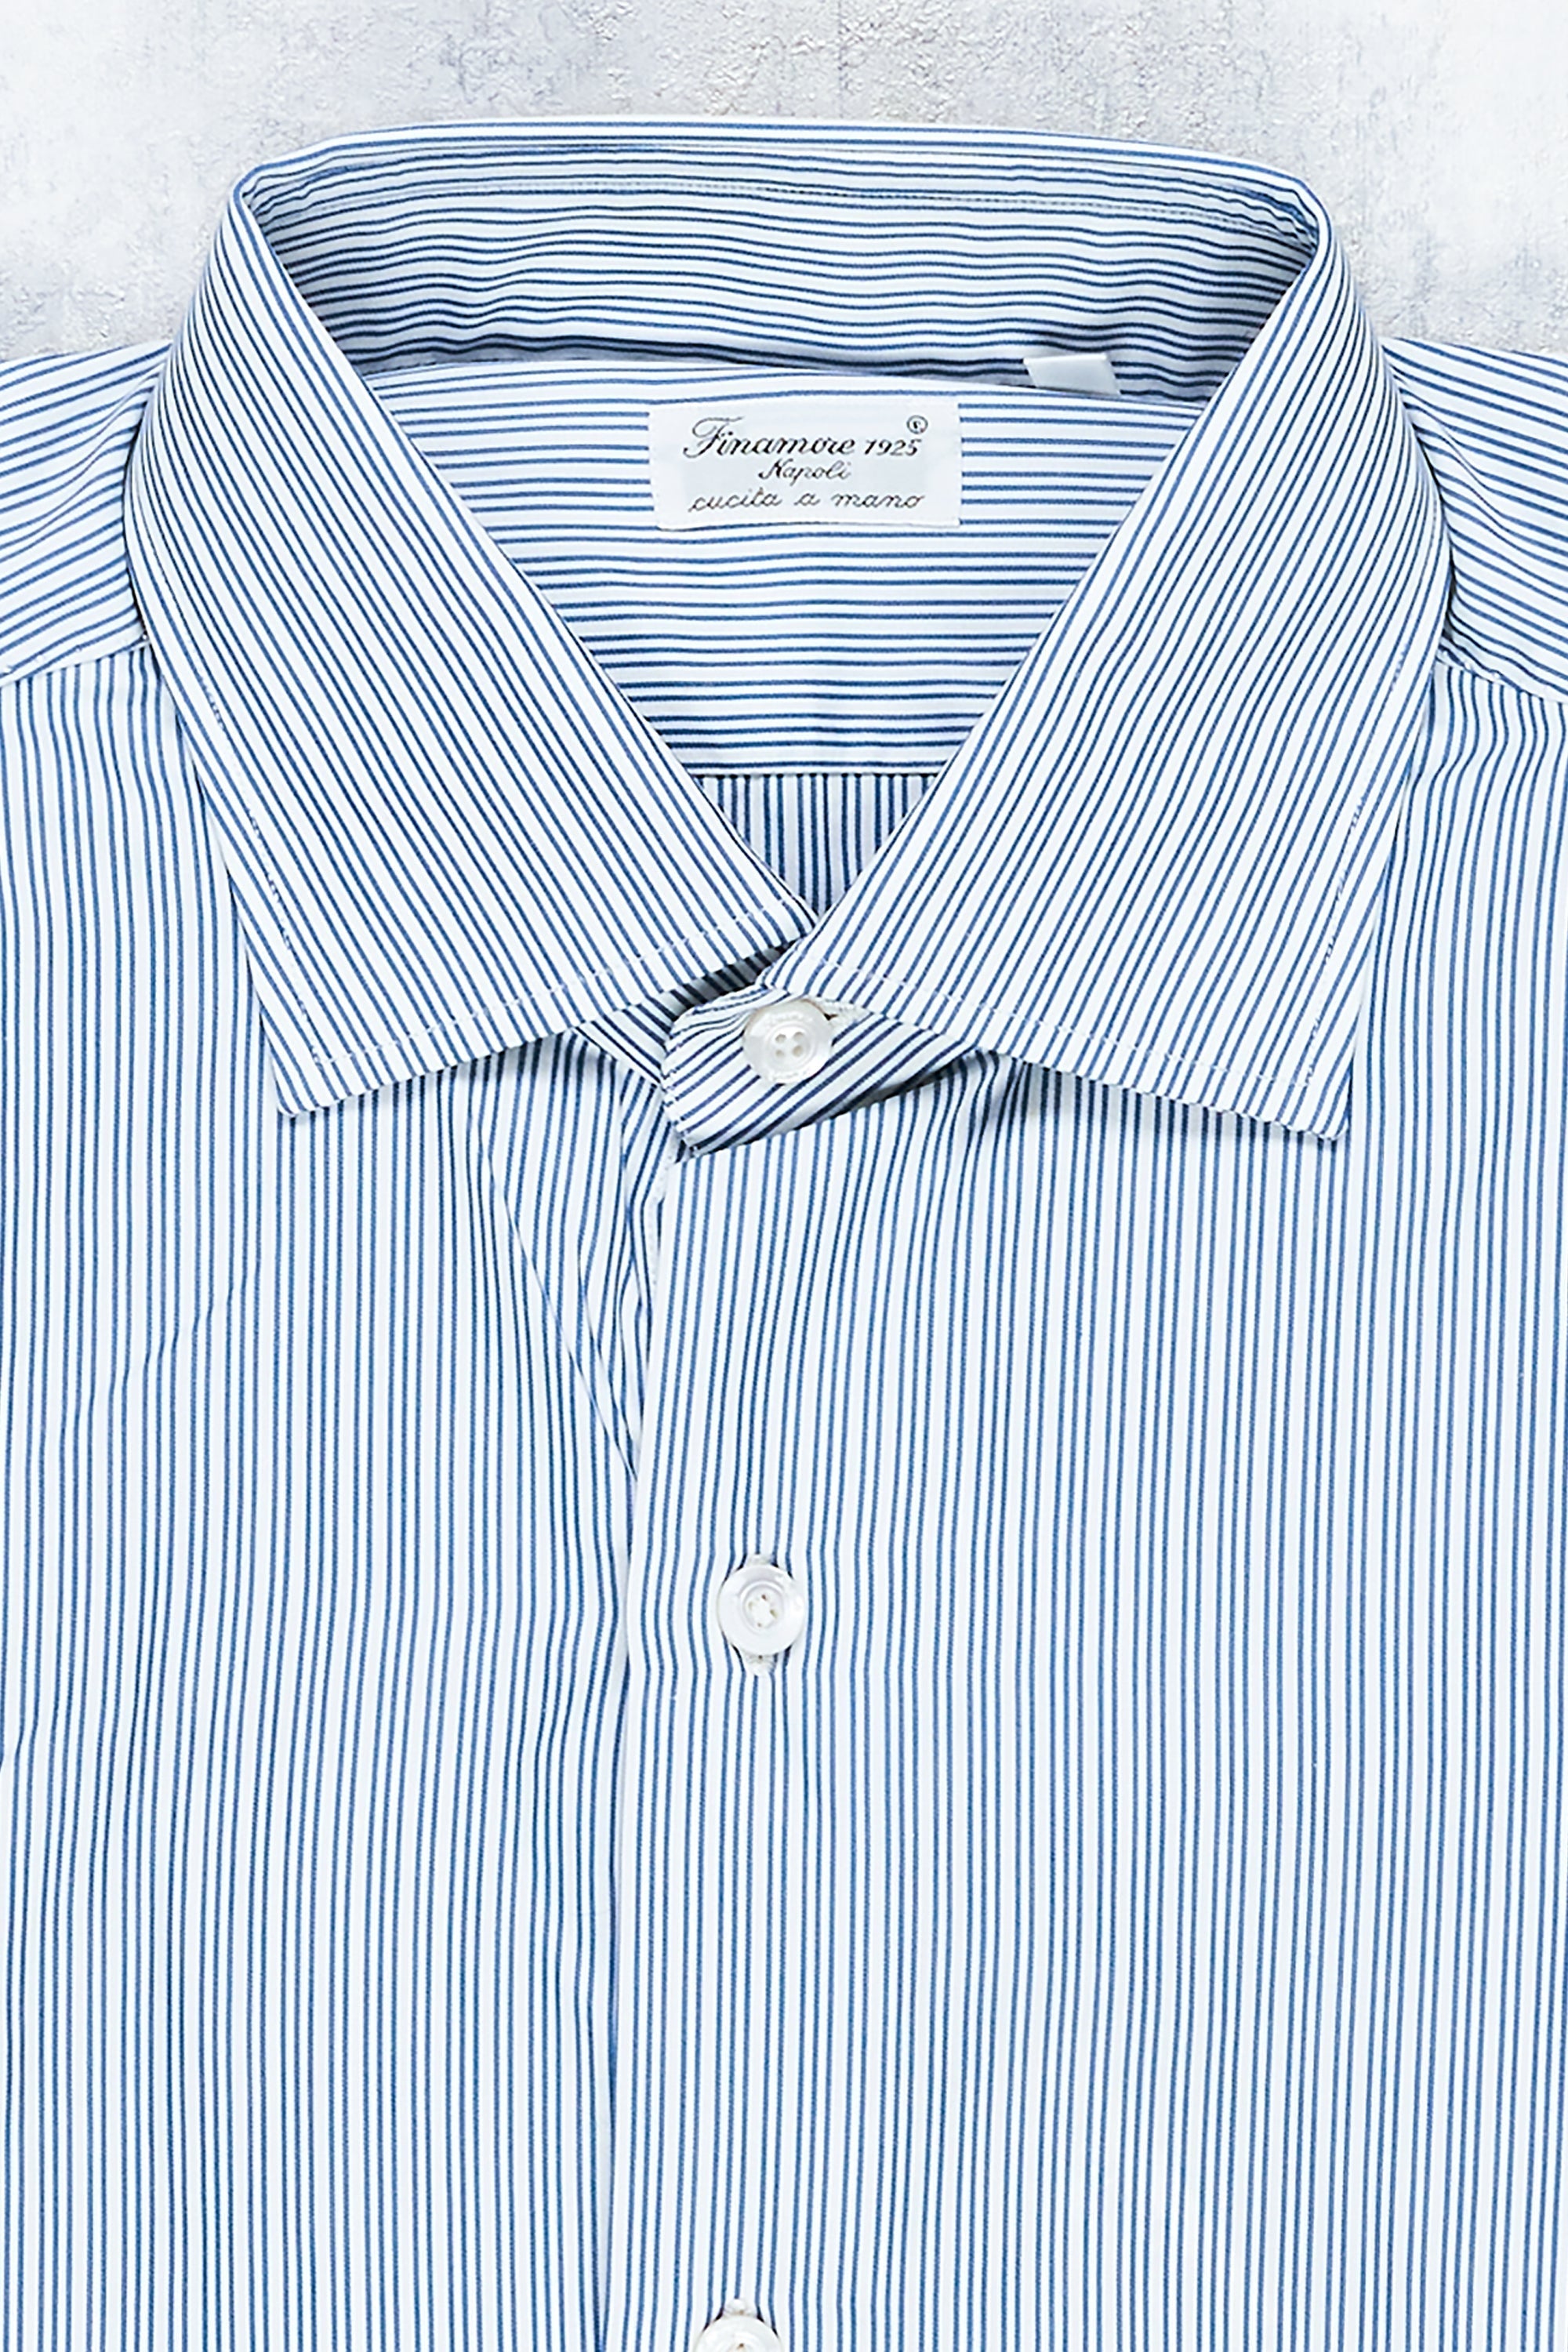 Finamore Double-Triple Blue Stripe Cotton Spread Collar Dress Shirt